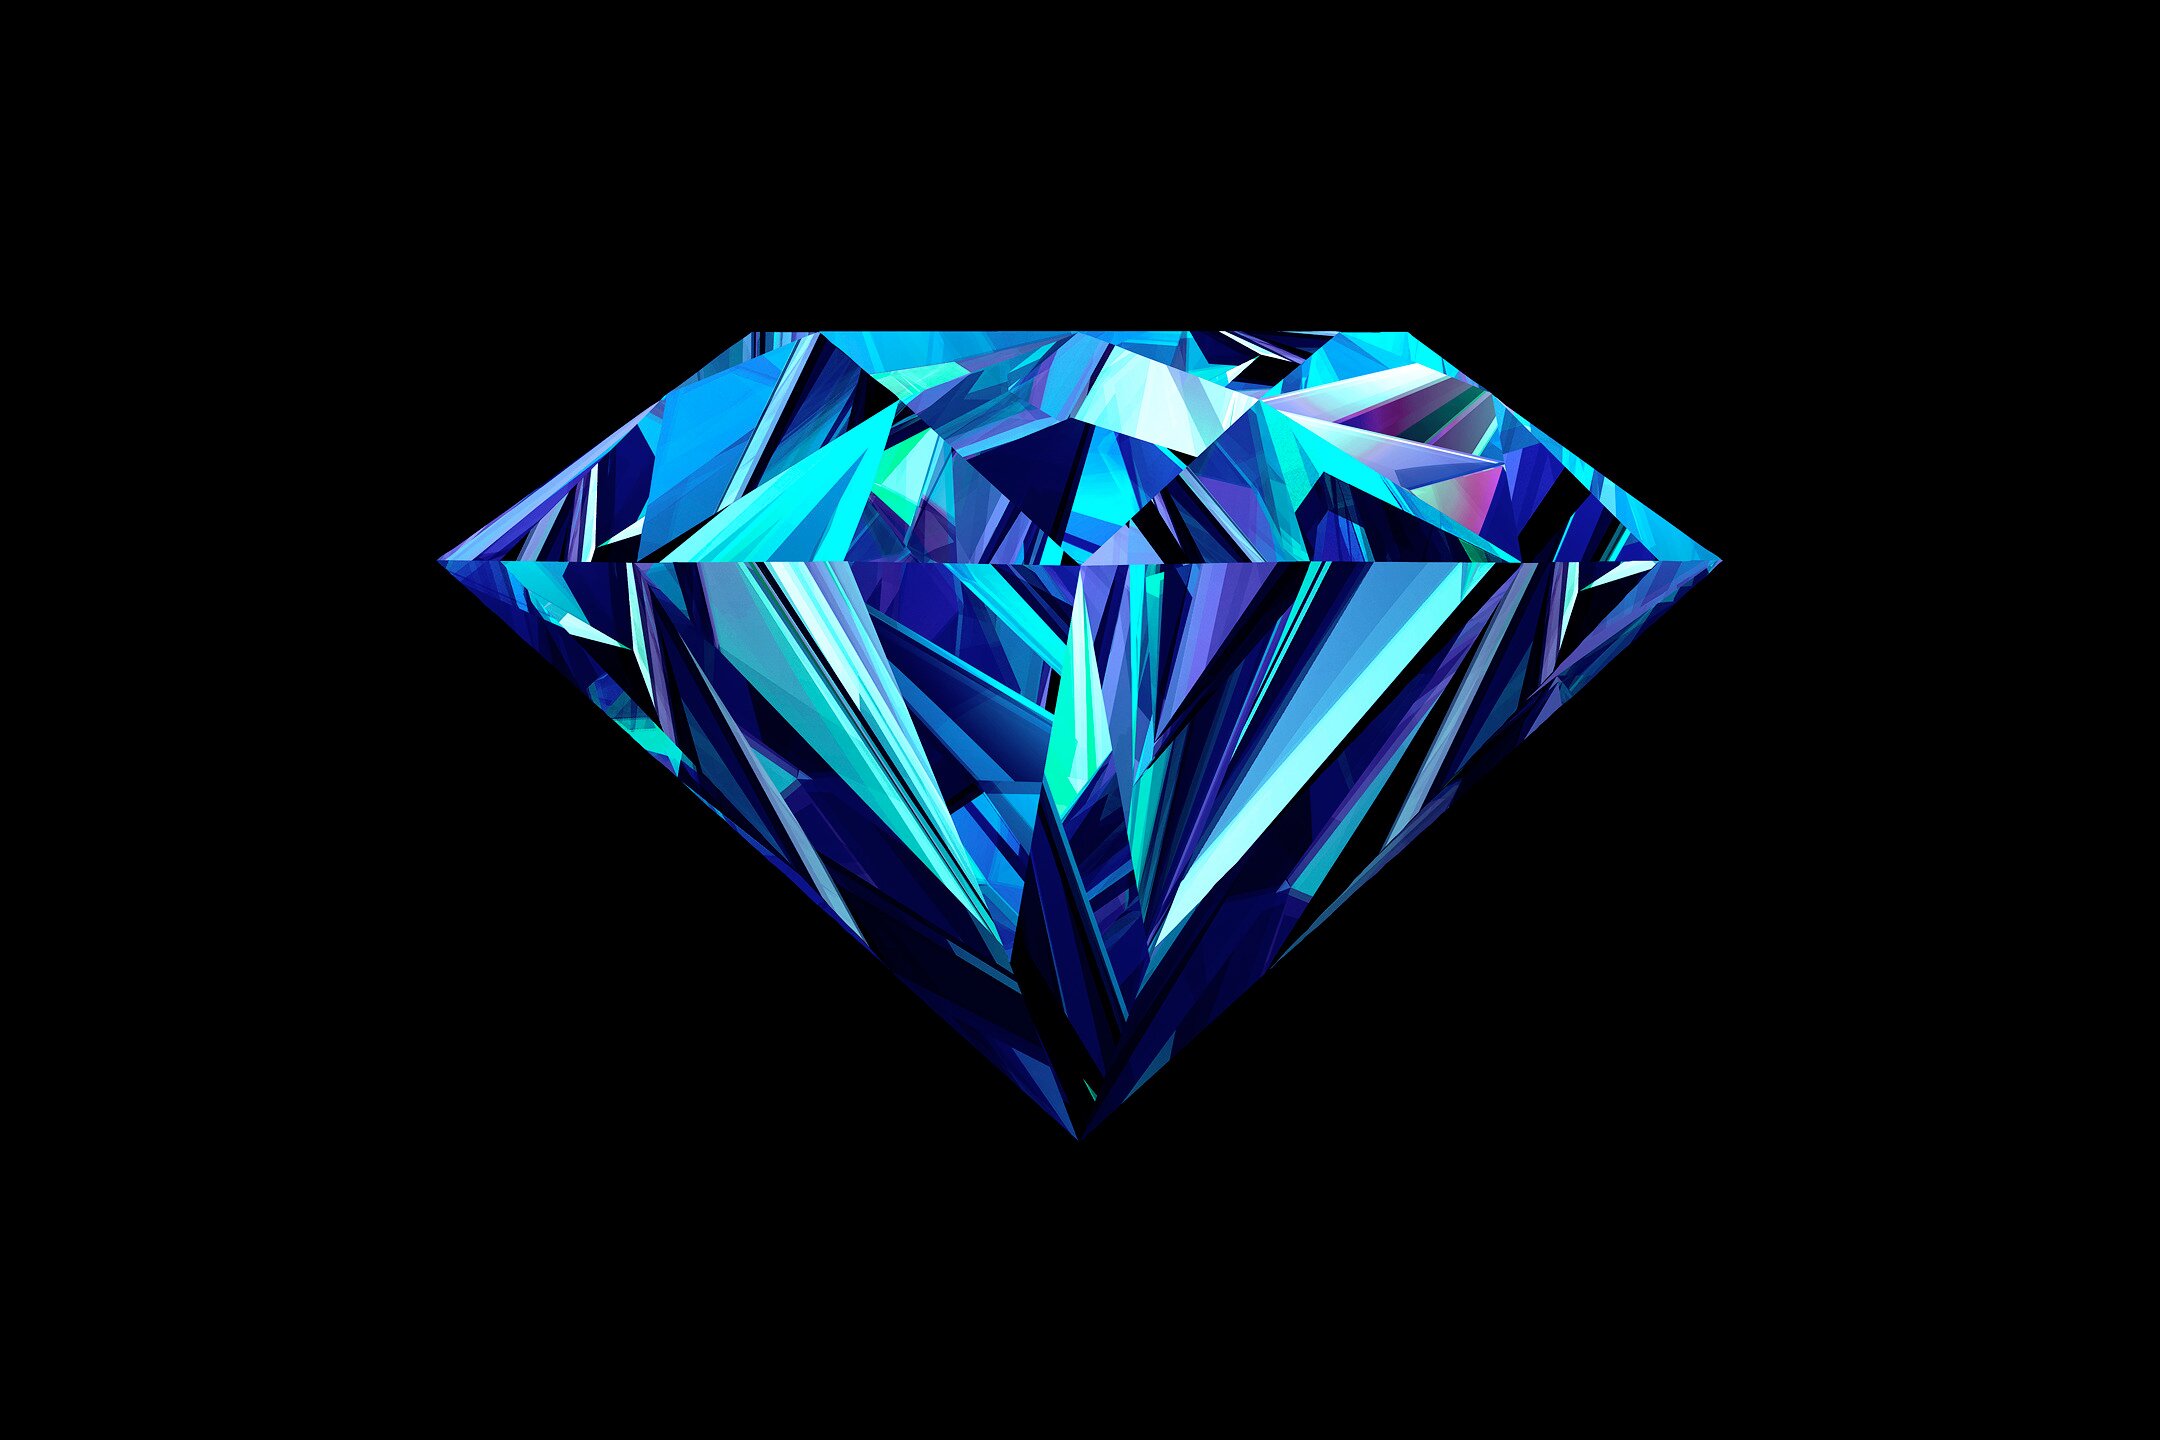 Diamond Price Prediction Using Machine Learning